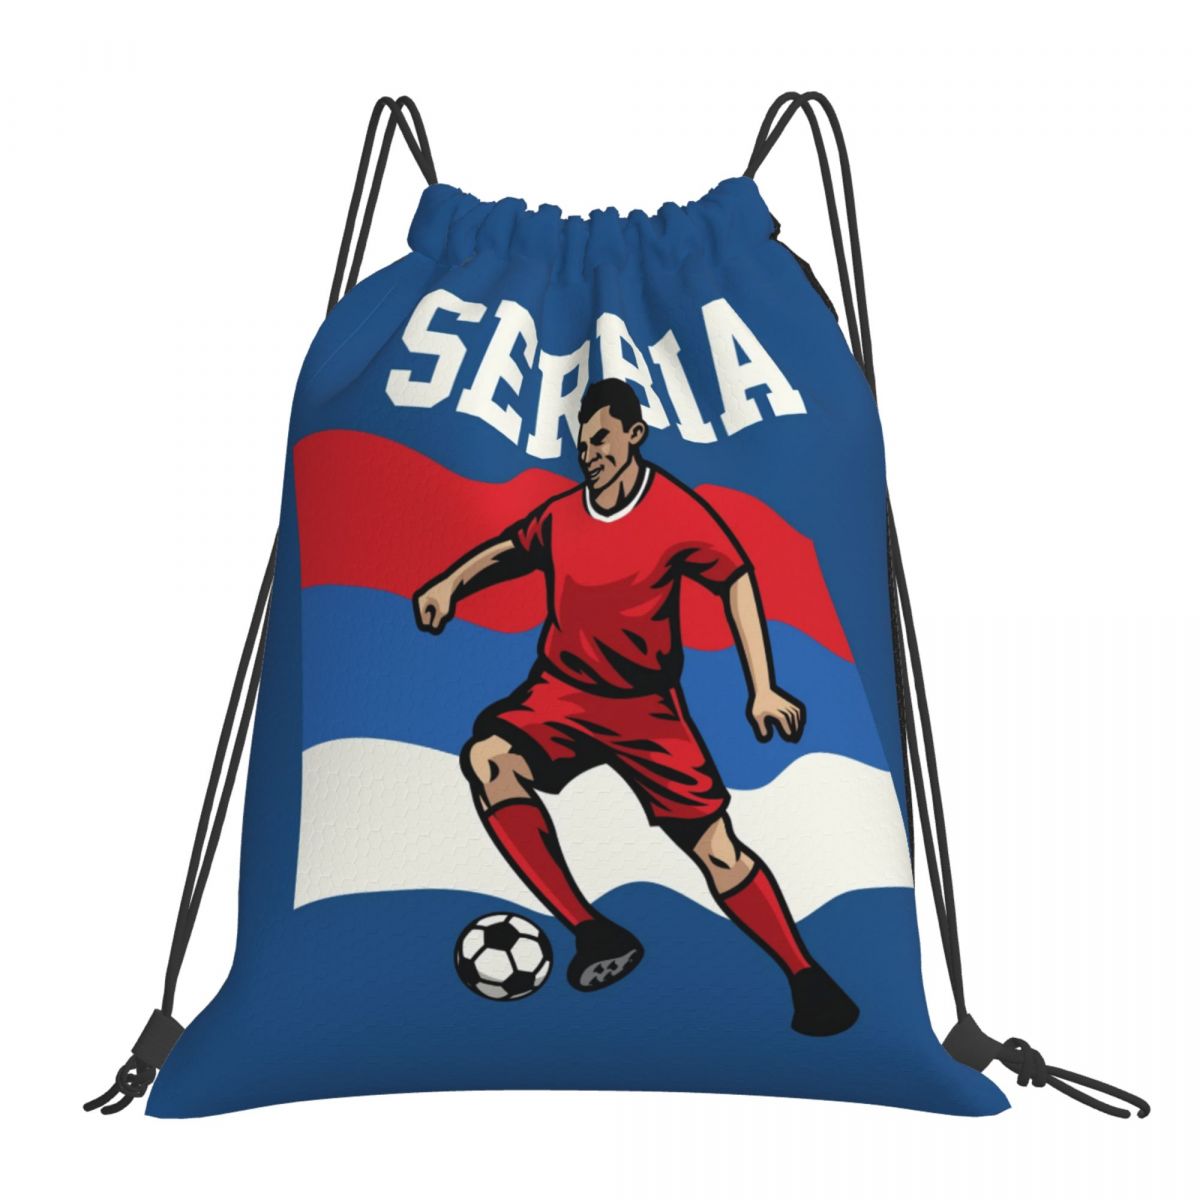 Serbia Soccer Player Unisex Drawstring Backpack Bag Travel Sackpack